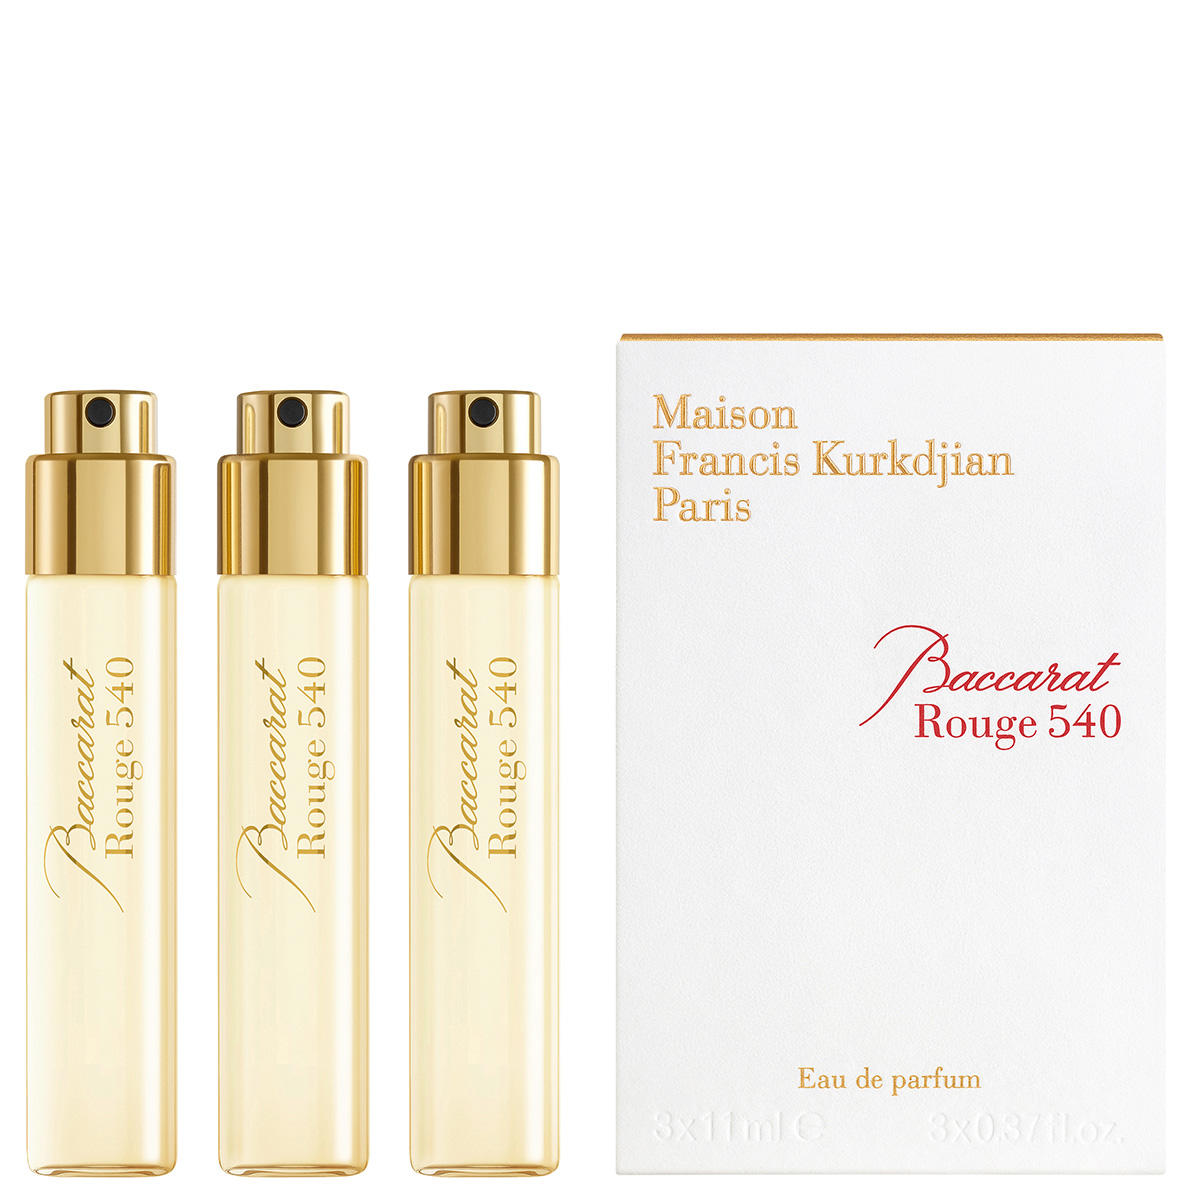 Maison Francis Kurkdjian Paris Baccarat Rouge 540 Eau de Parfum Refill Emballage de 3 x 11 ml - 2